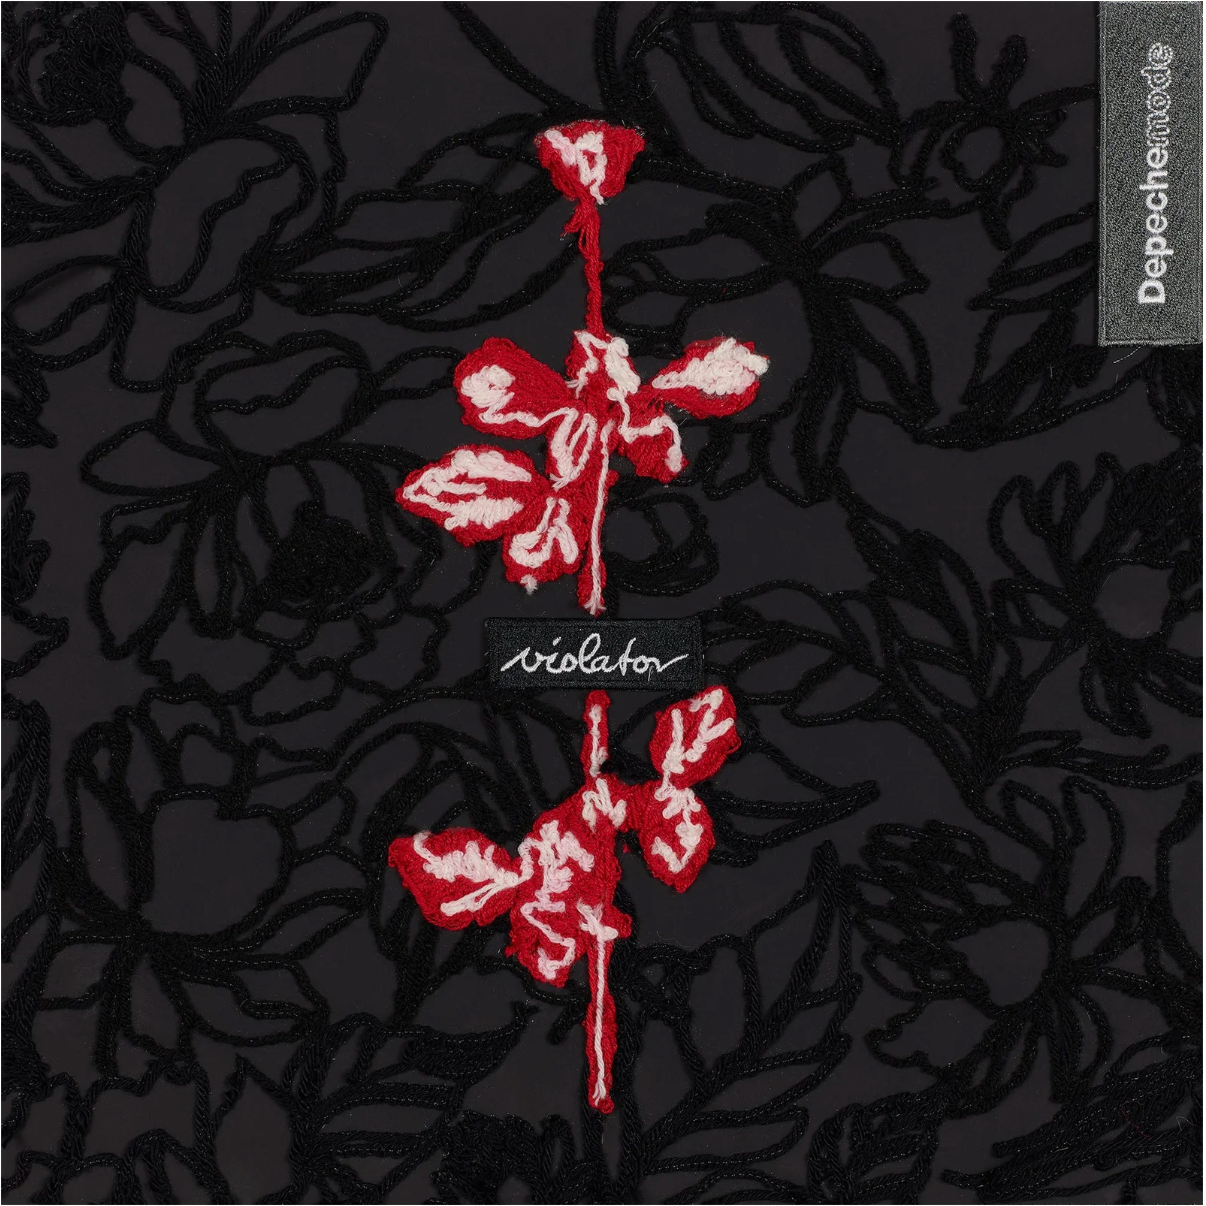 Violator, Depeche Mode by Stephen Wilson (12x12x2